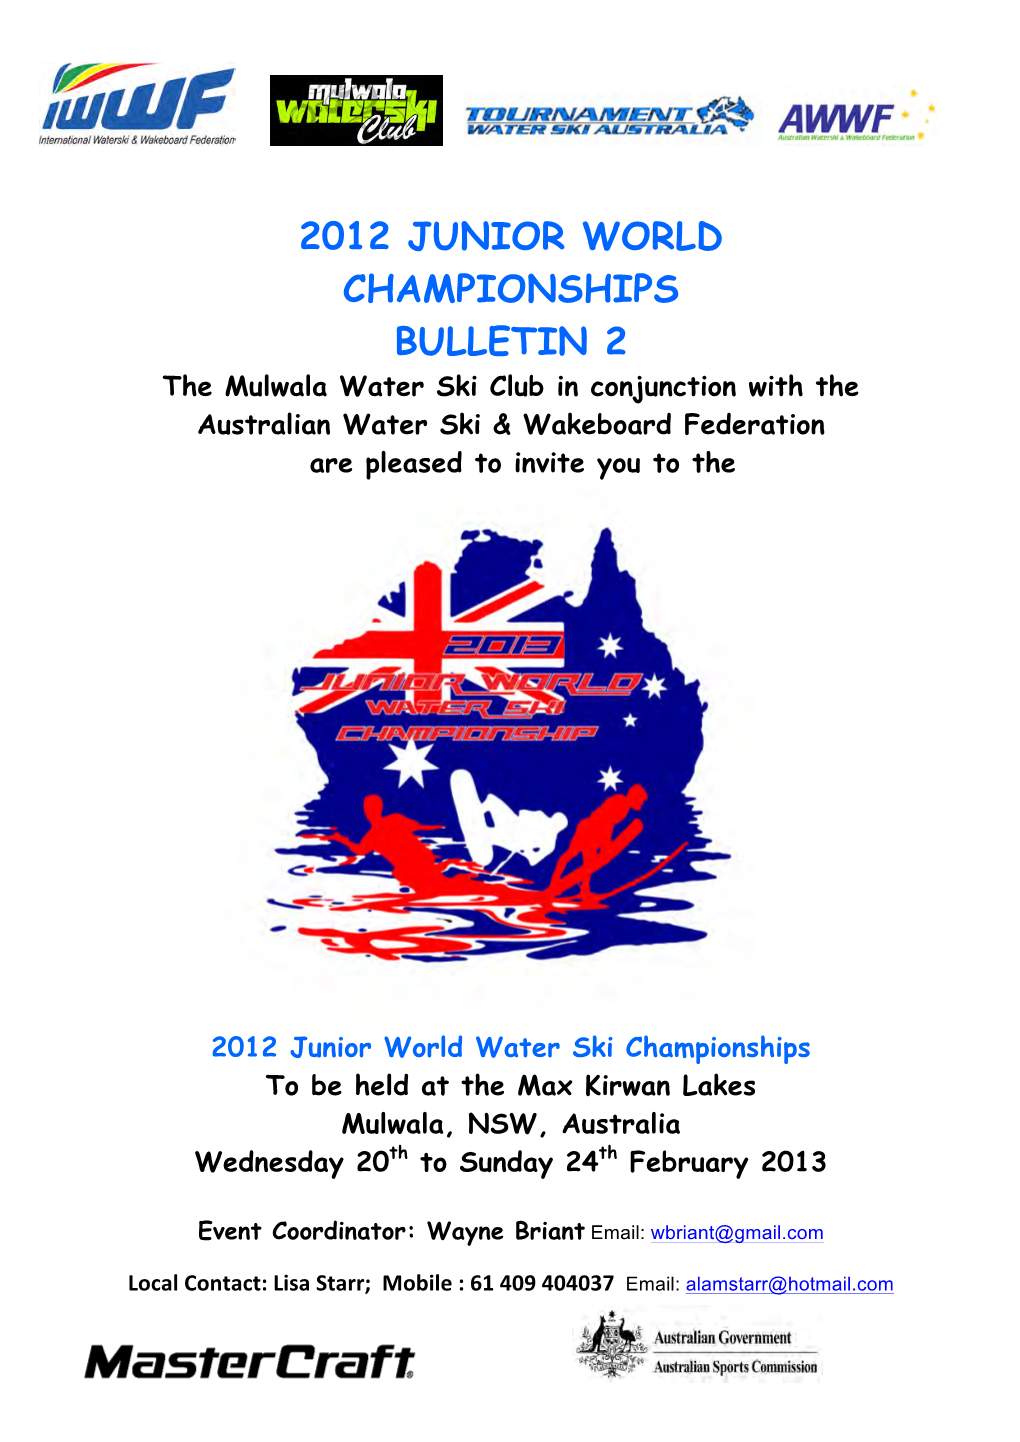 2012 Junior World Championships Bulletin 2